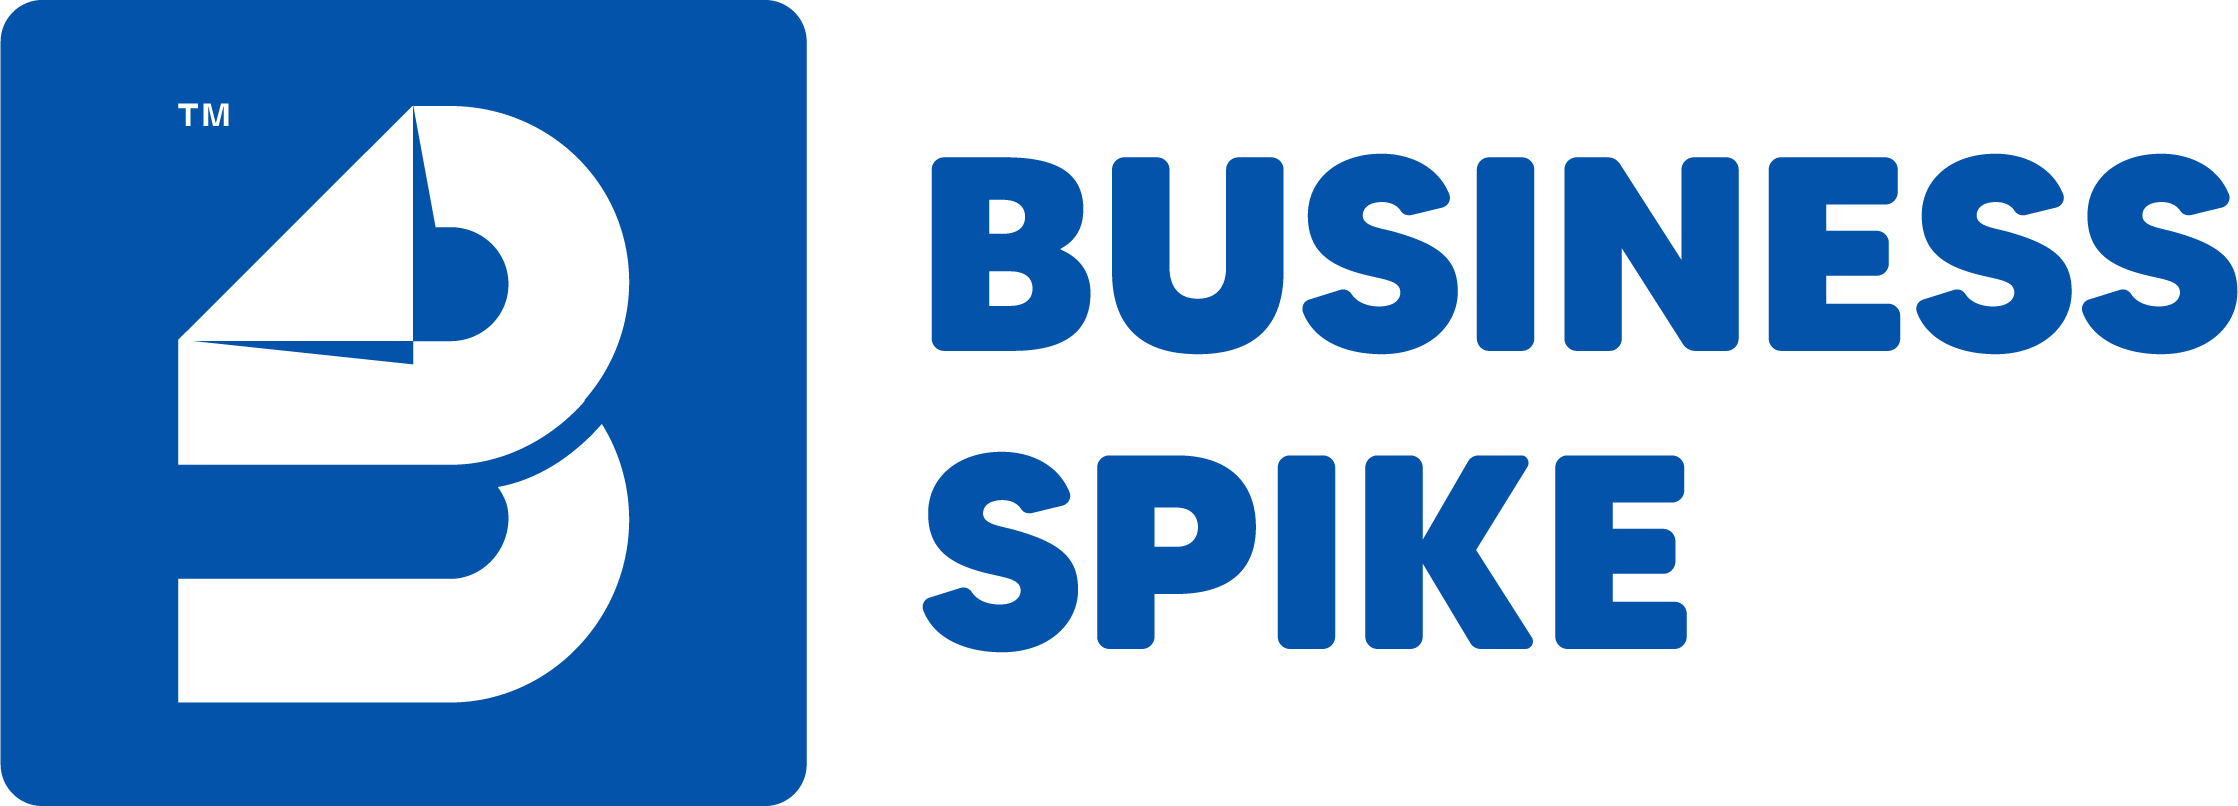 business-logo-2